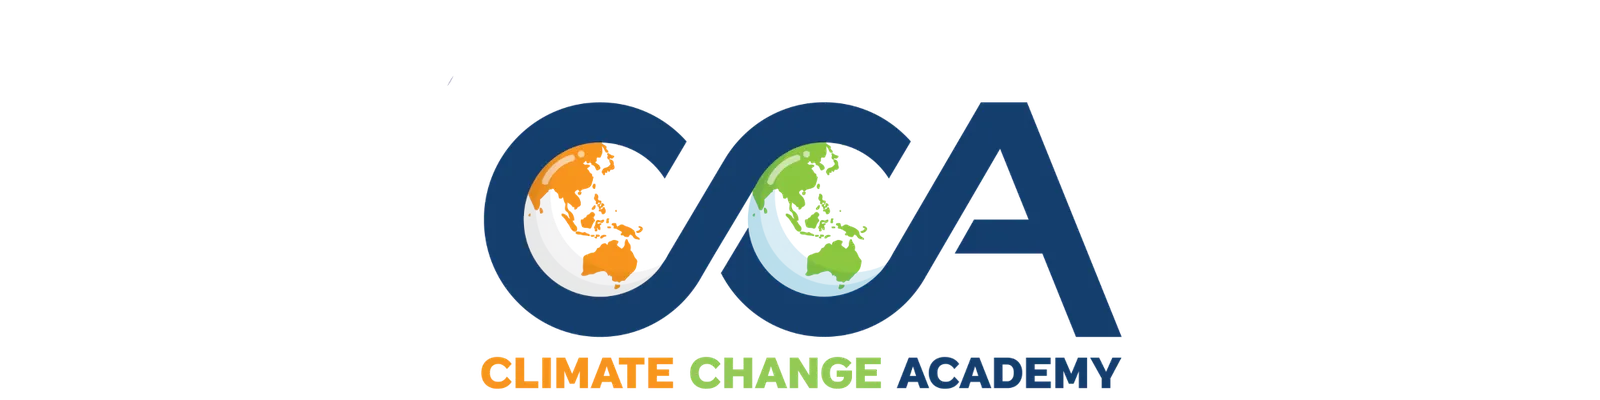 Climate Change Acadamy